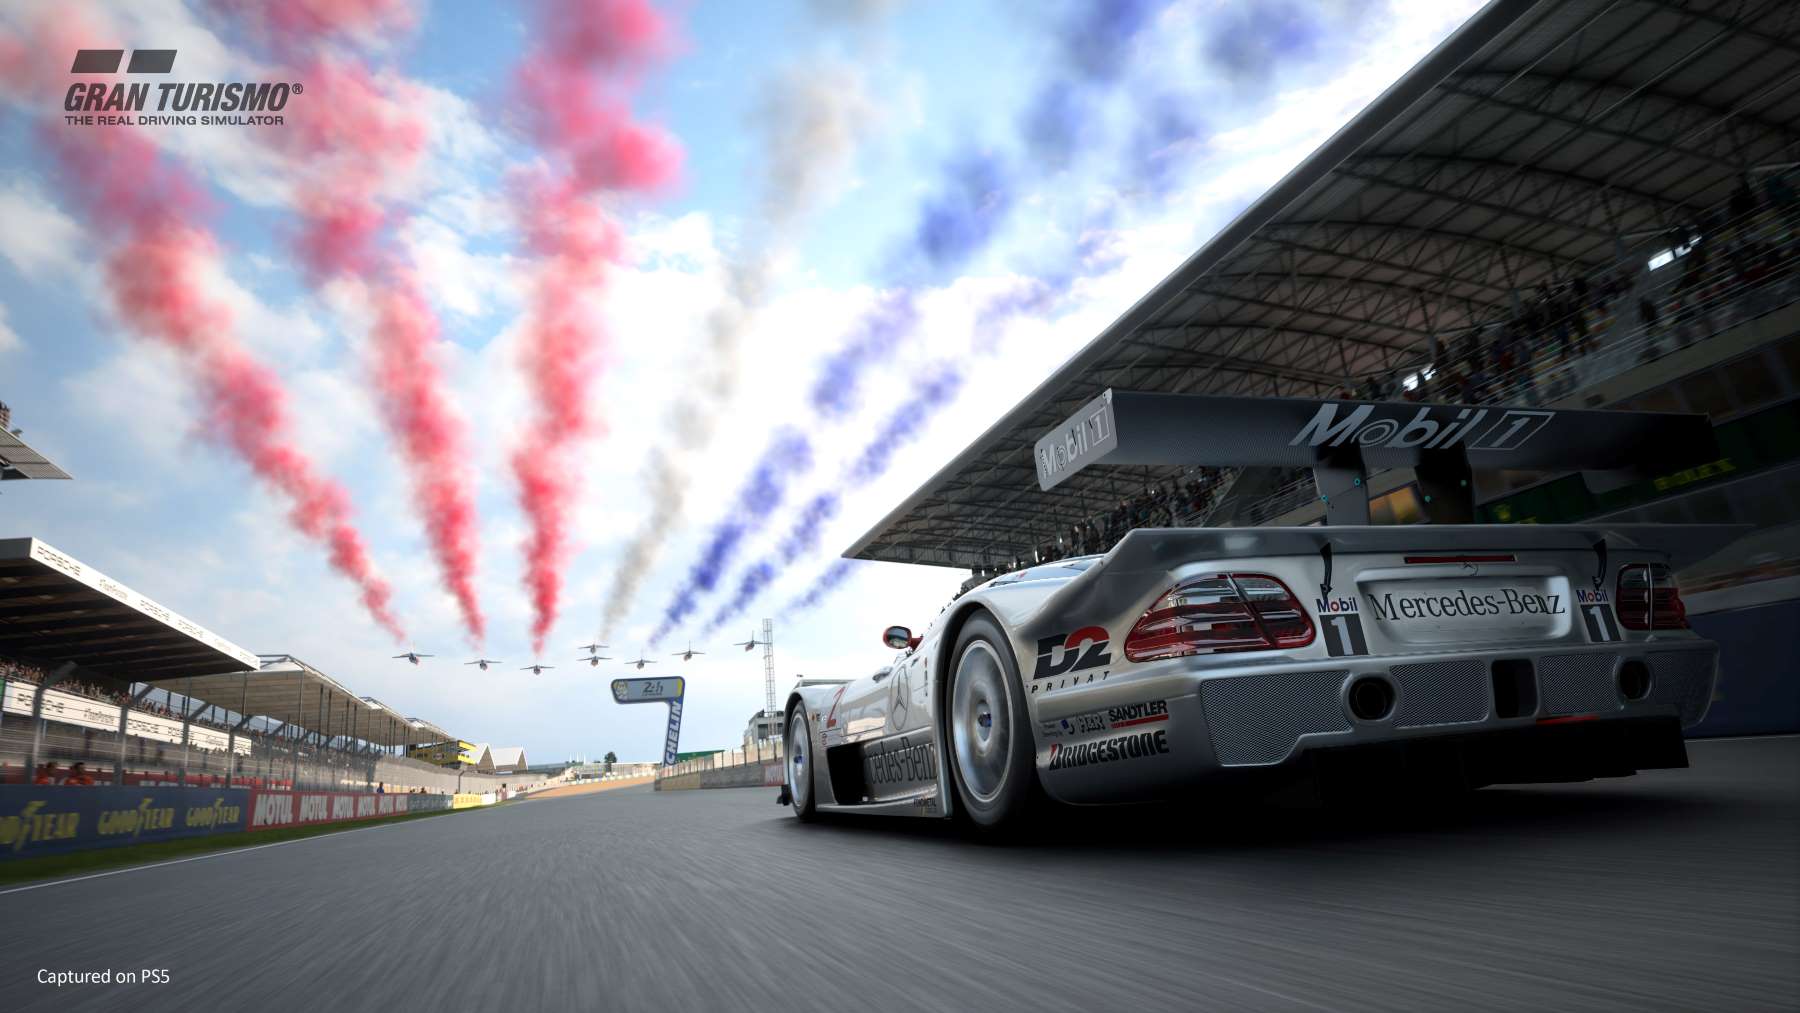 Gran Turismo 7 Just Set An Unfortunate Record